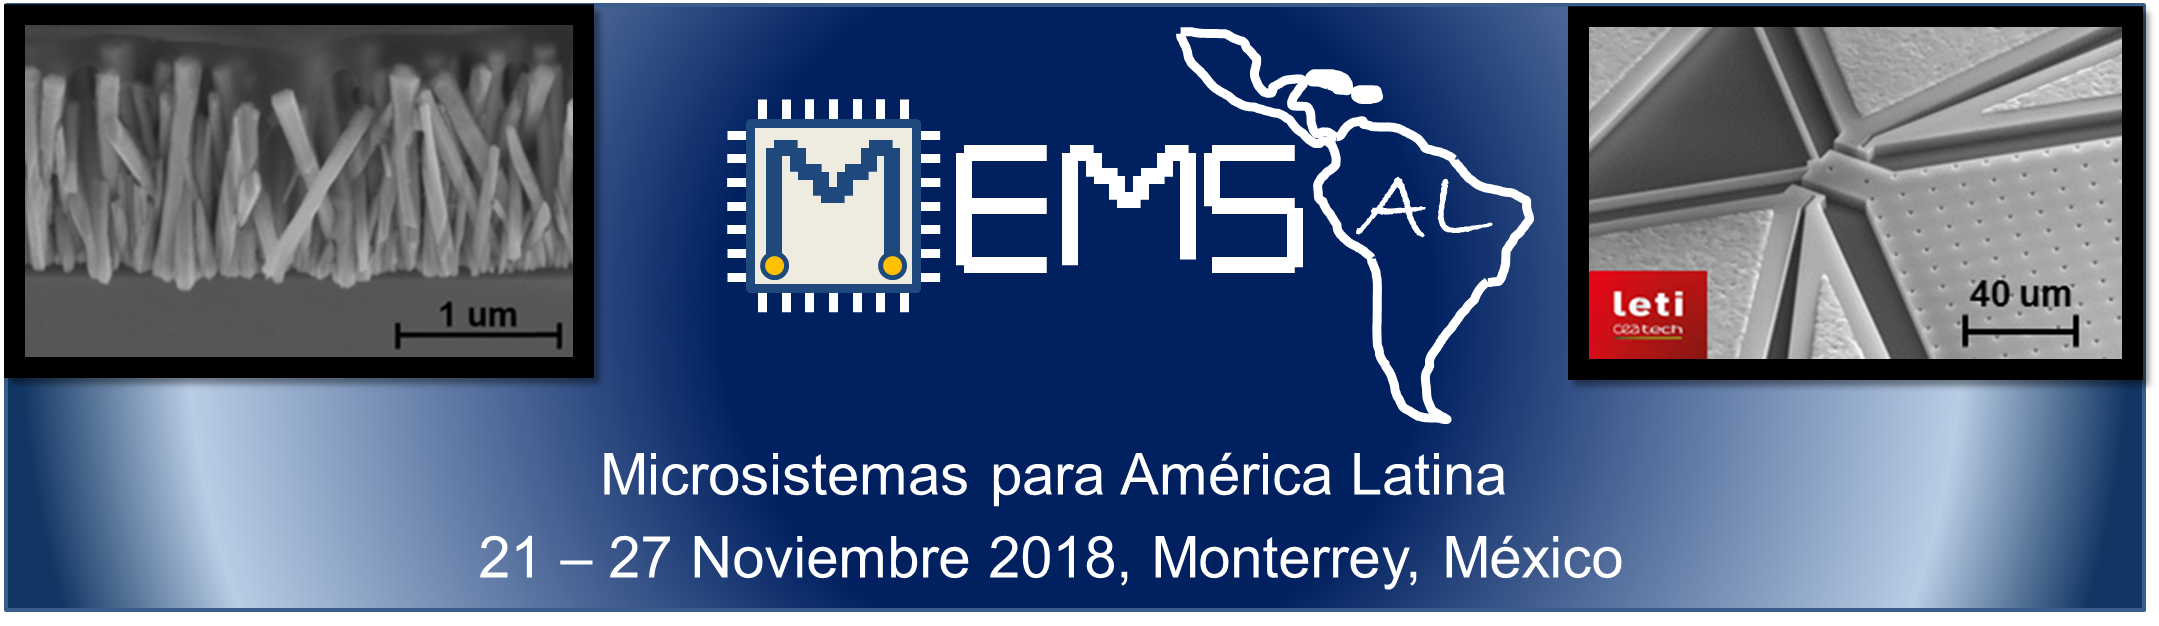 MEMS-Al Microsistemas para América Latina  21-2 Noviembre 2018